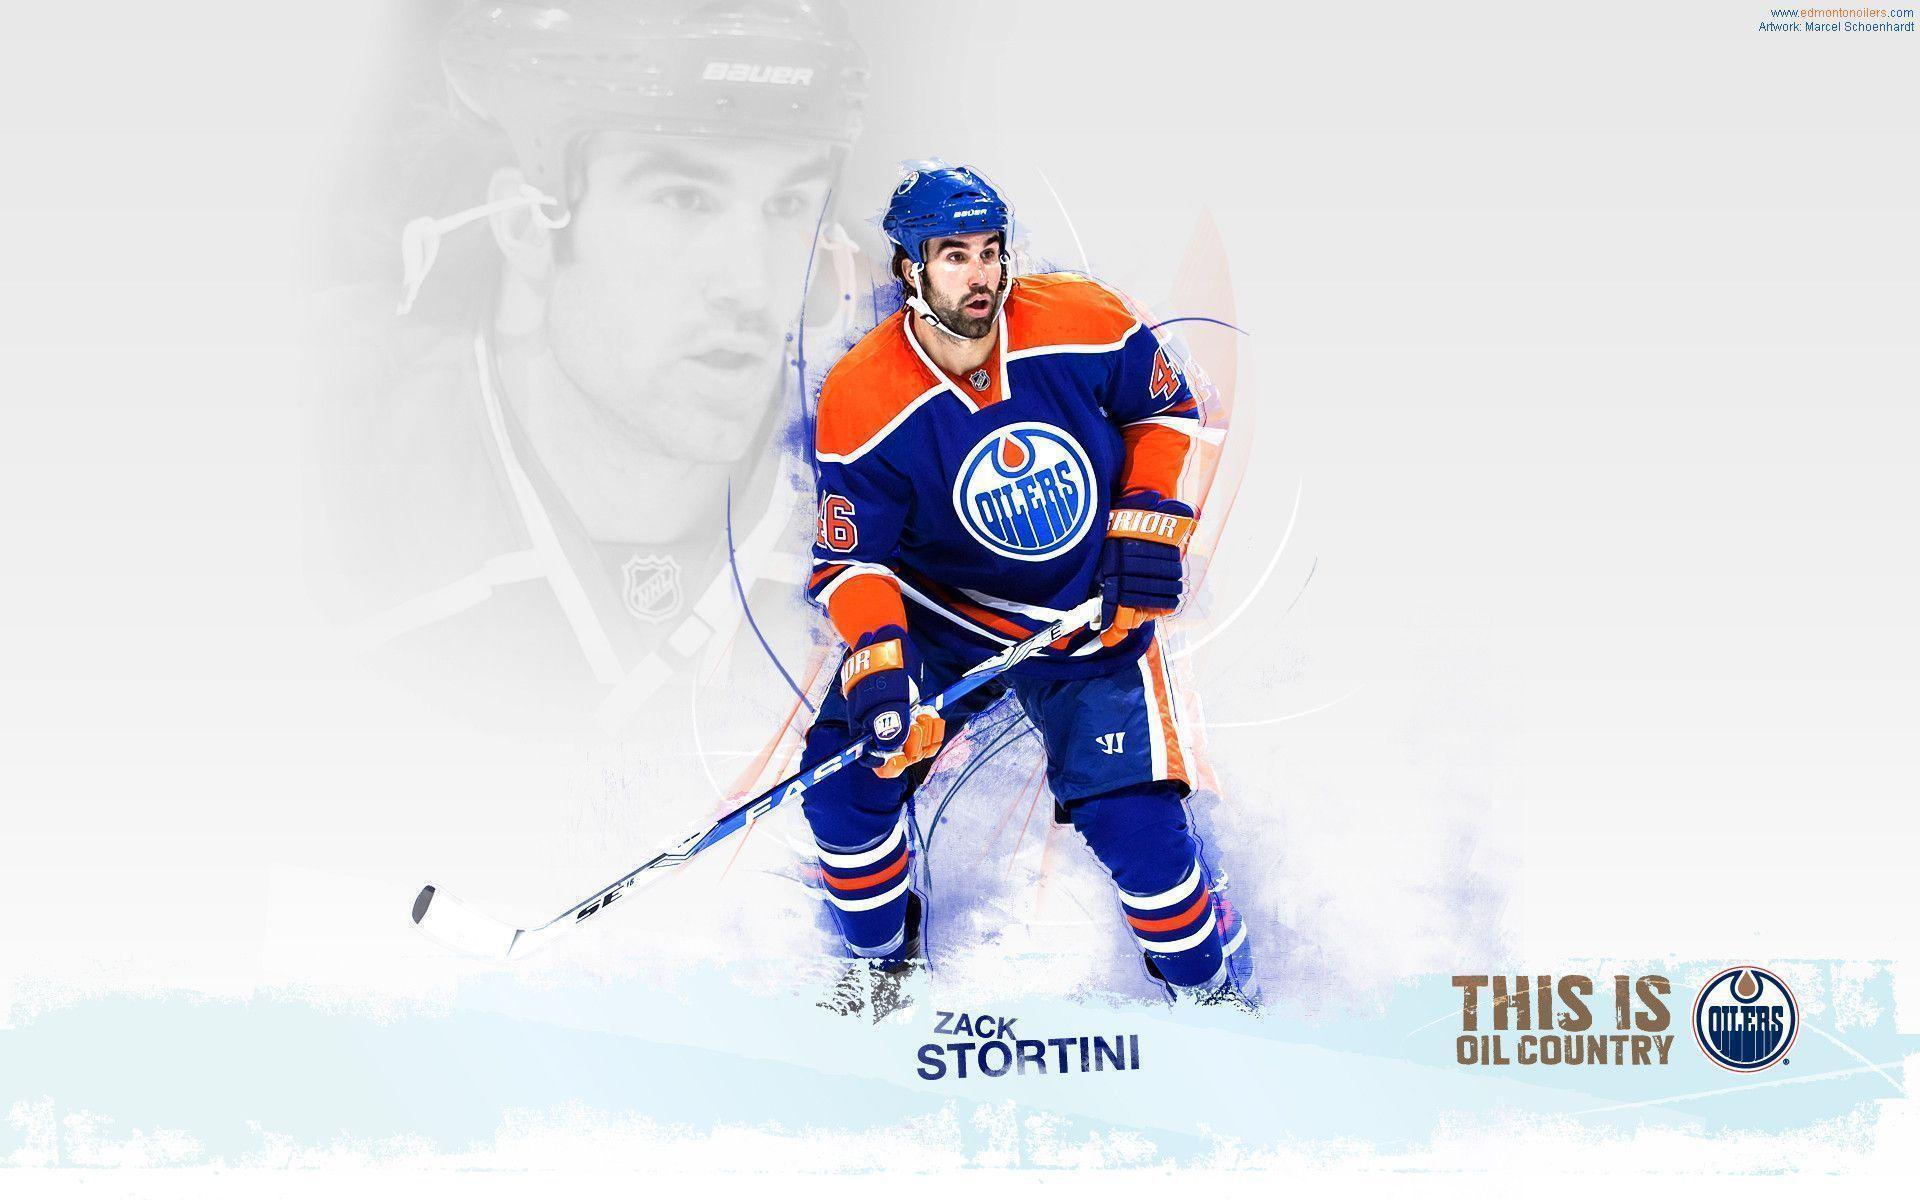 Edmonton Oilers HD image. Edmonton Oilers wallpaper